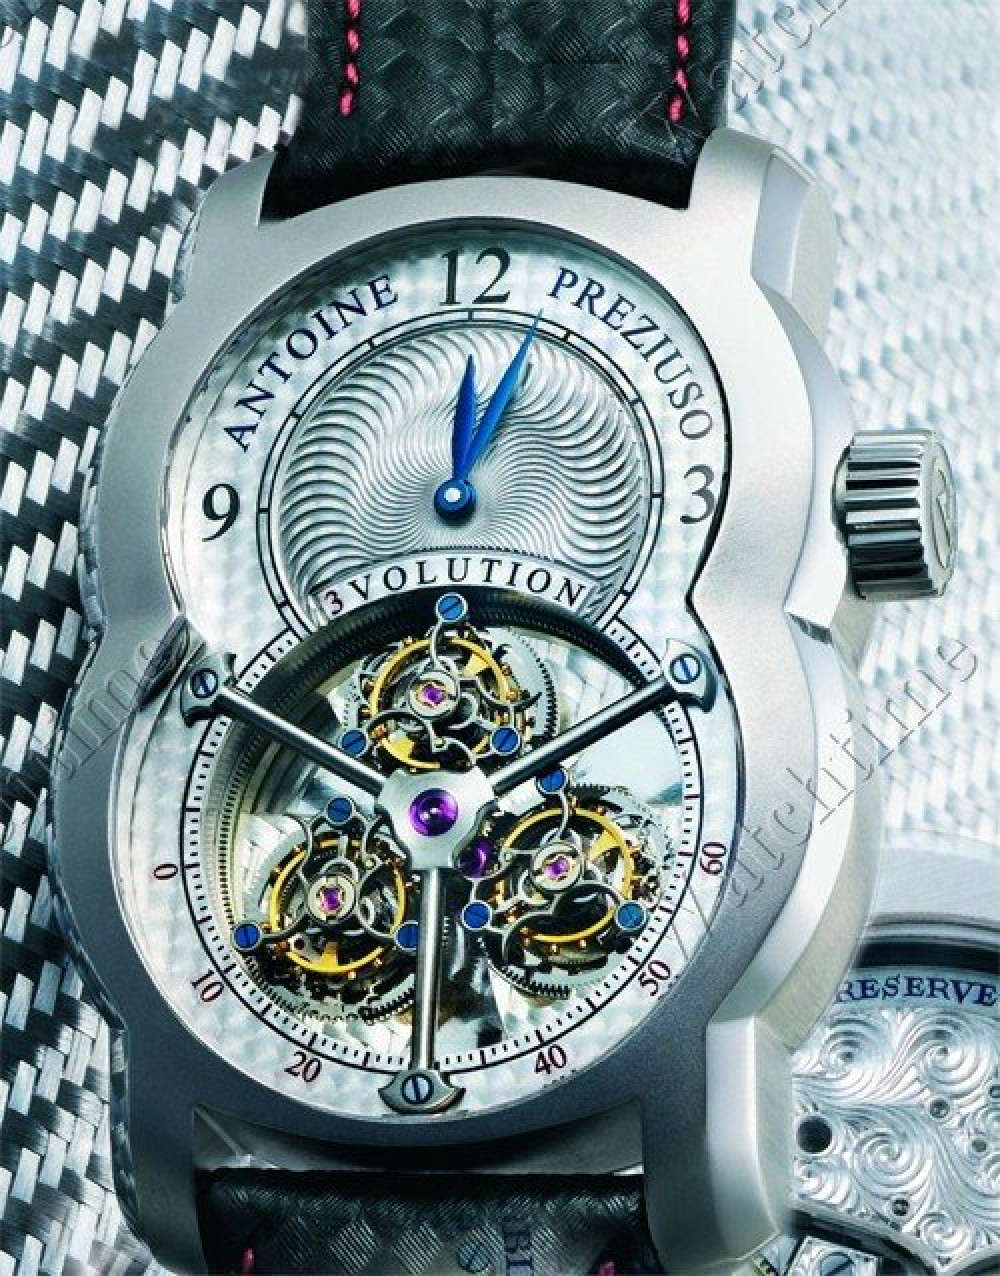 Zegarek firmy Antoine Preziuso, model 3volution